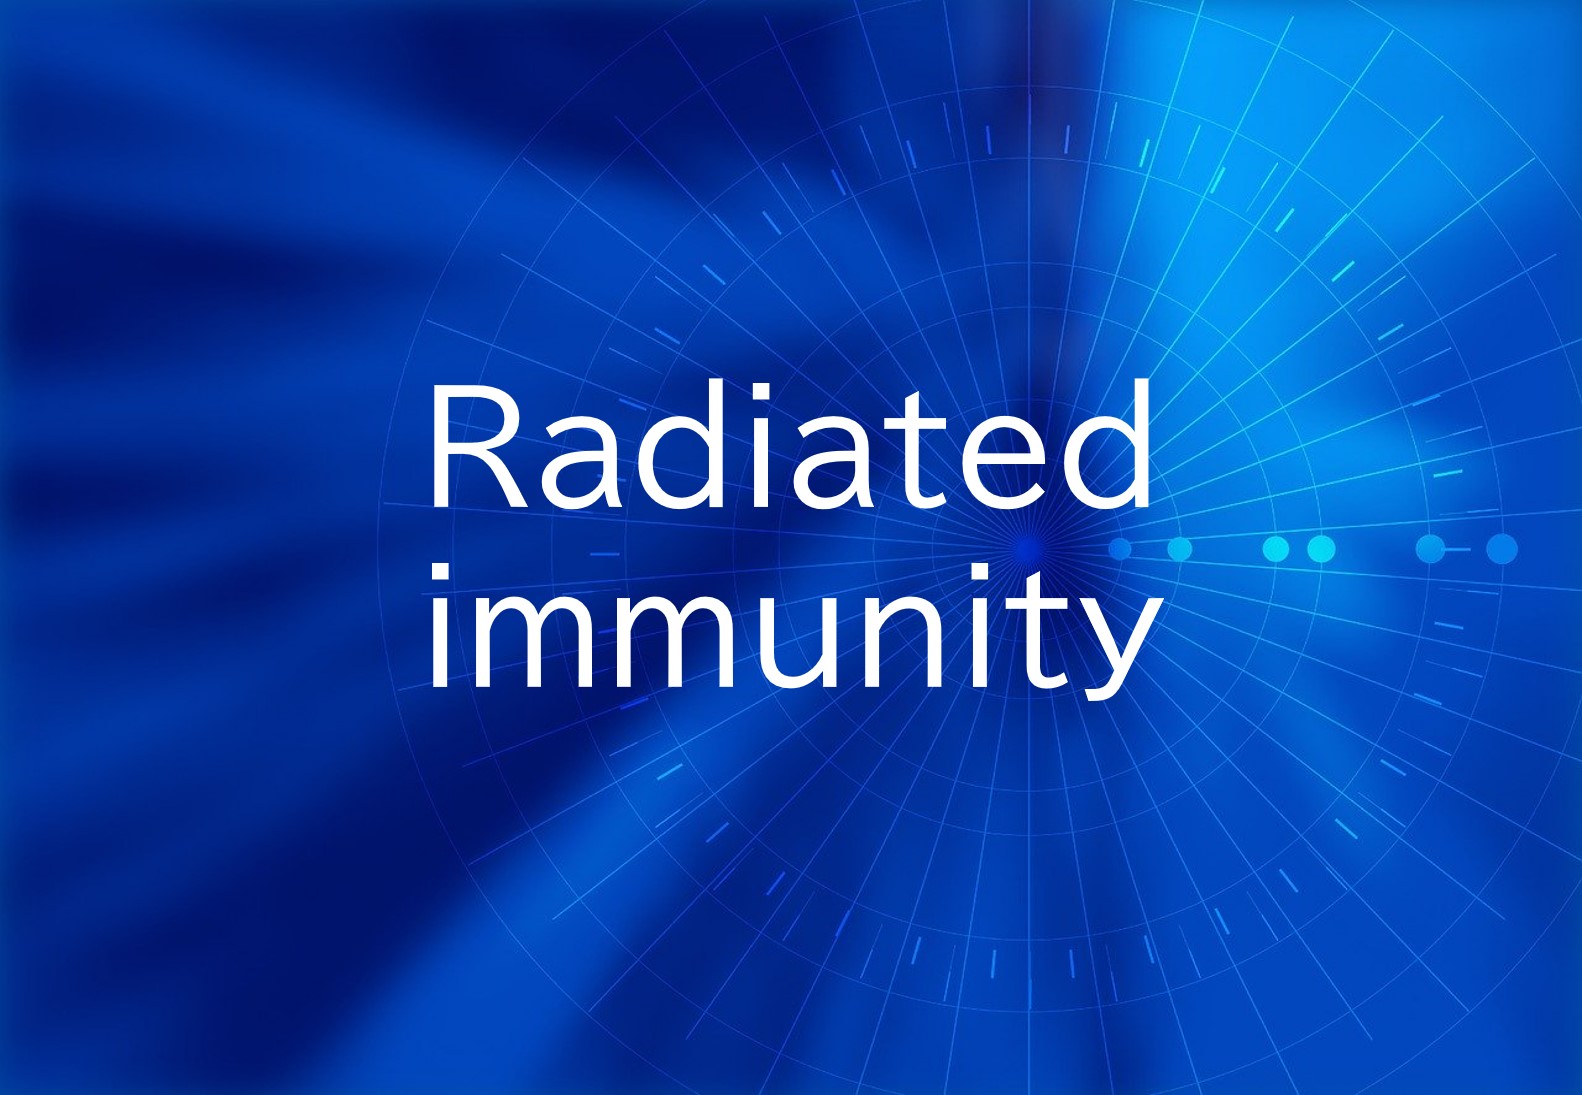 Radiated immunity